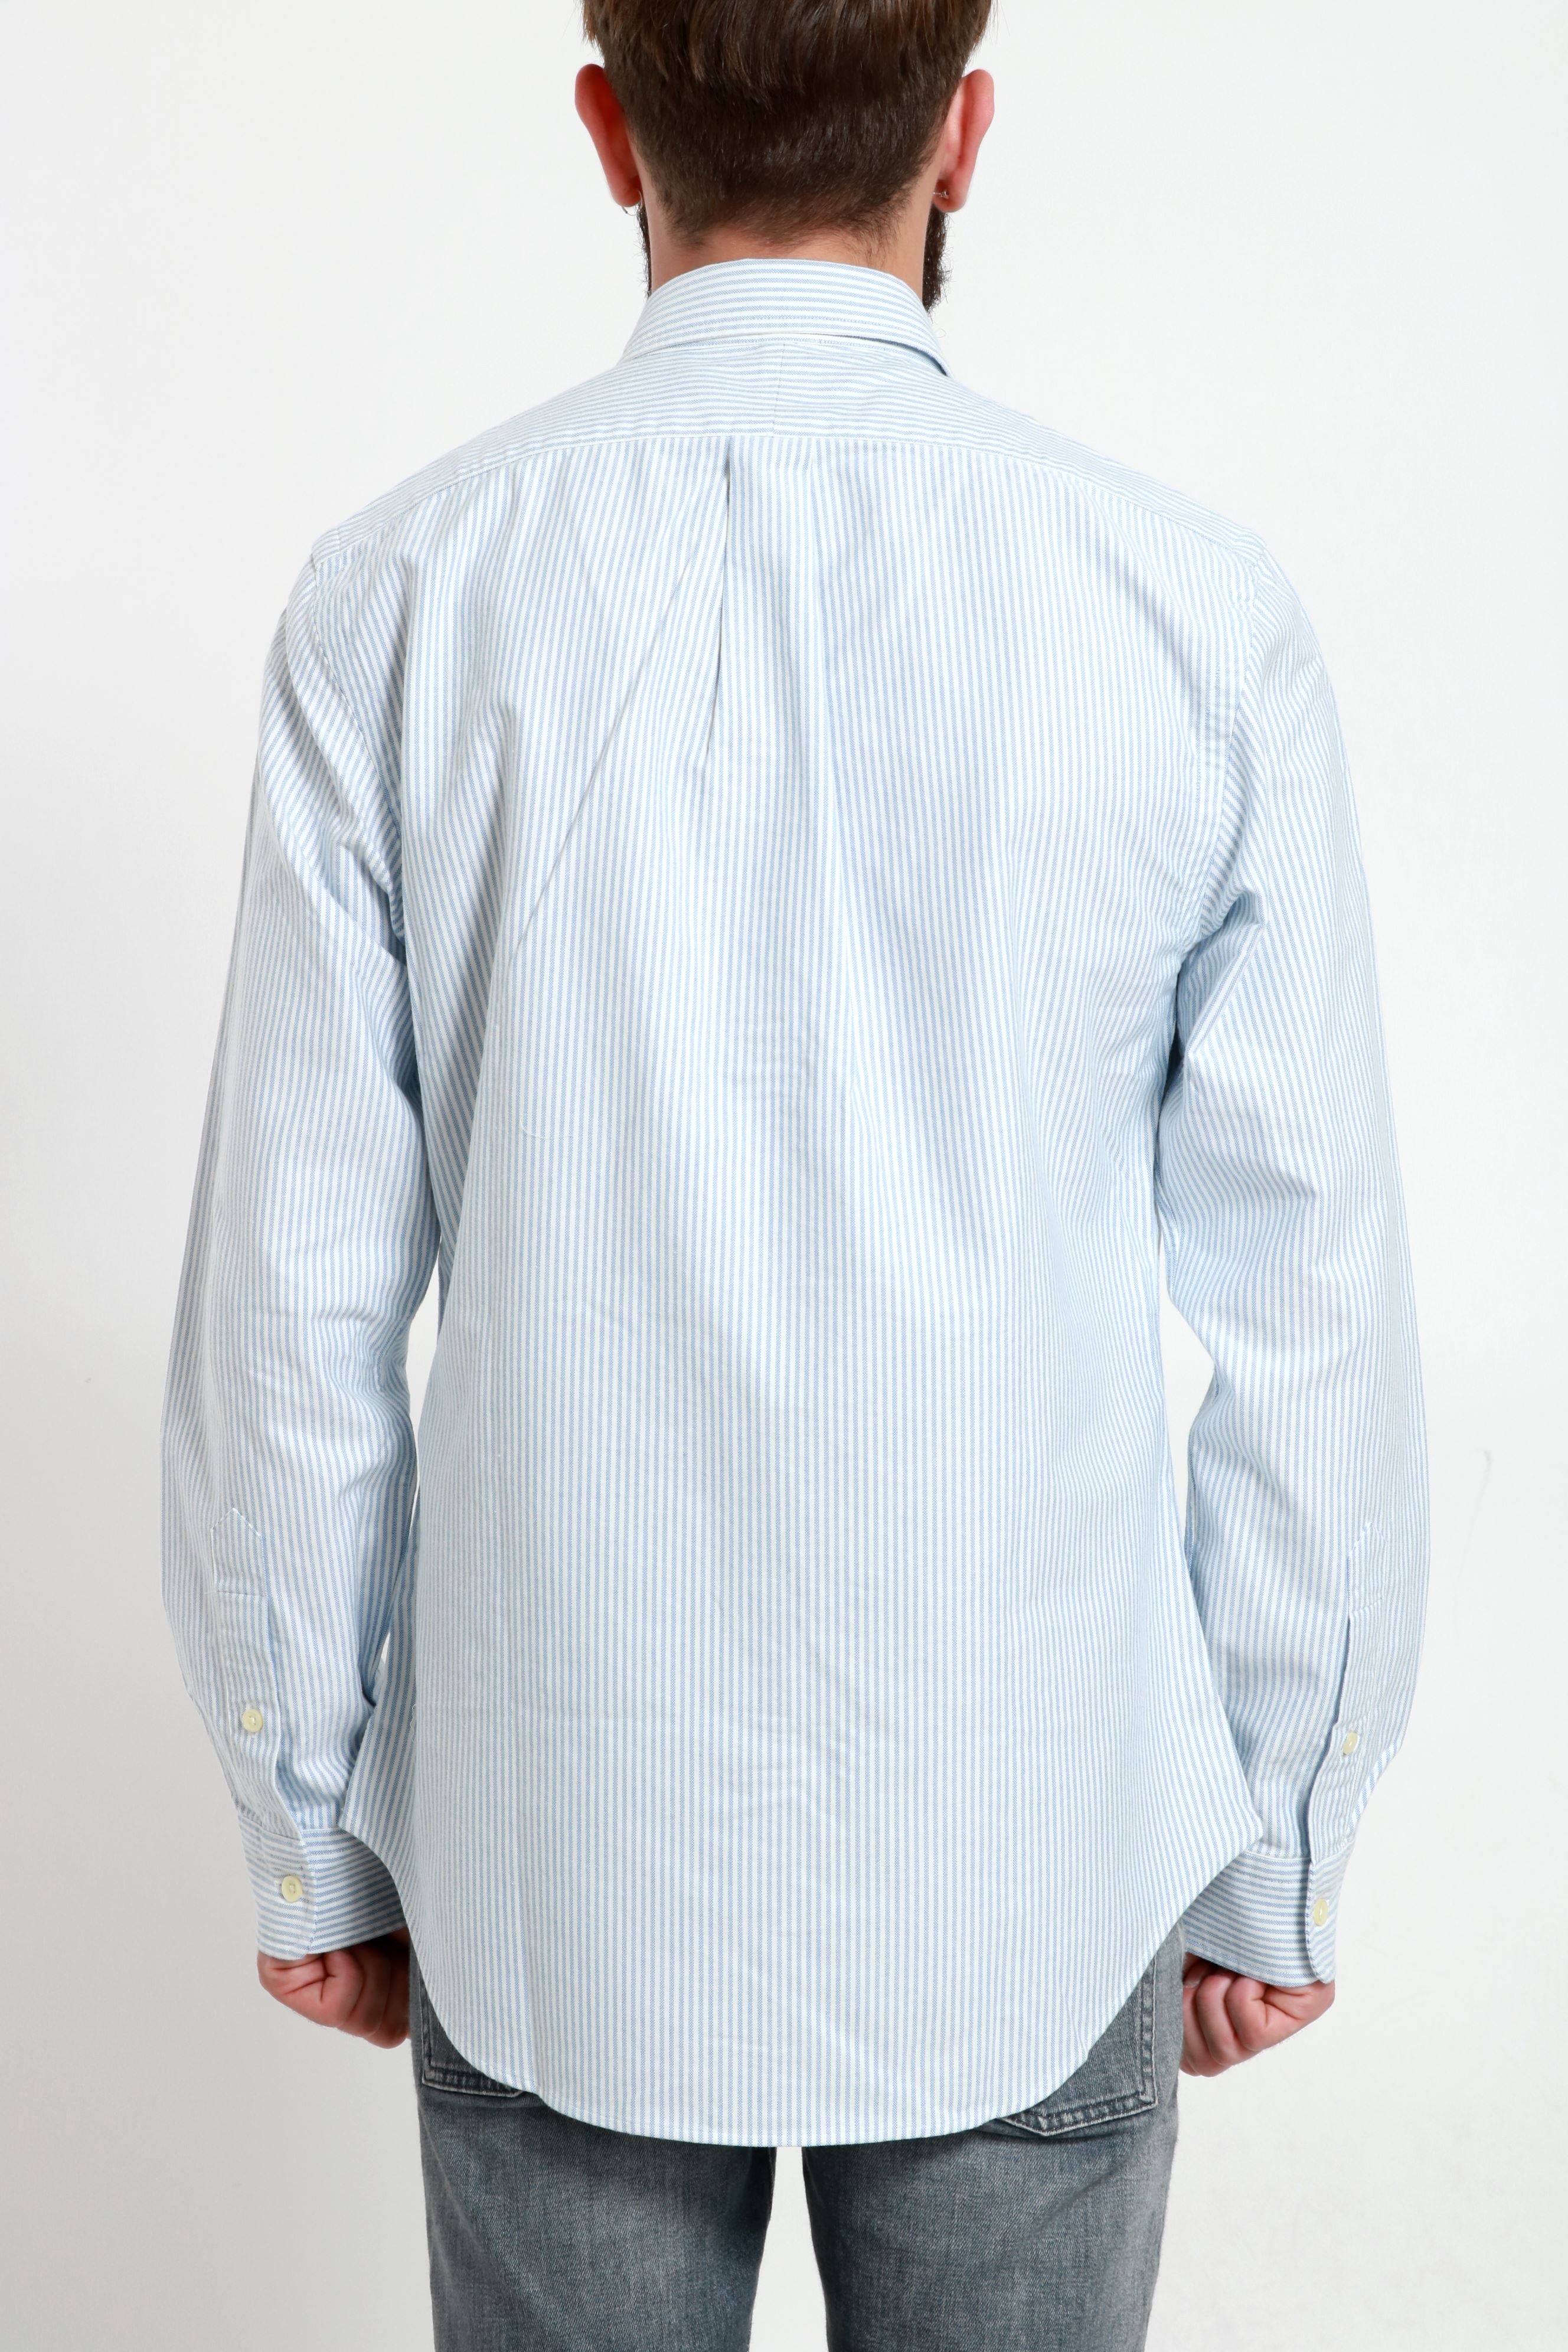 Polo Ralph Lauren | Camicia Celeste e bianco